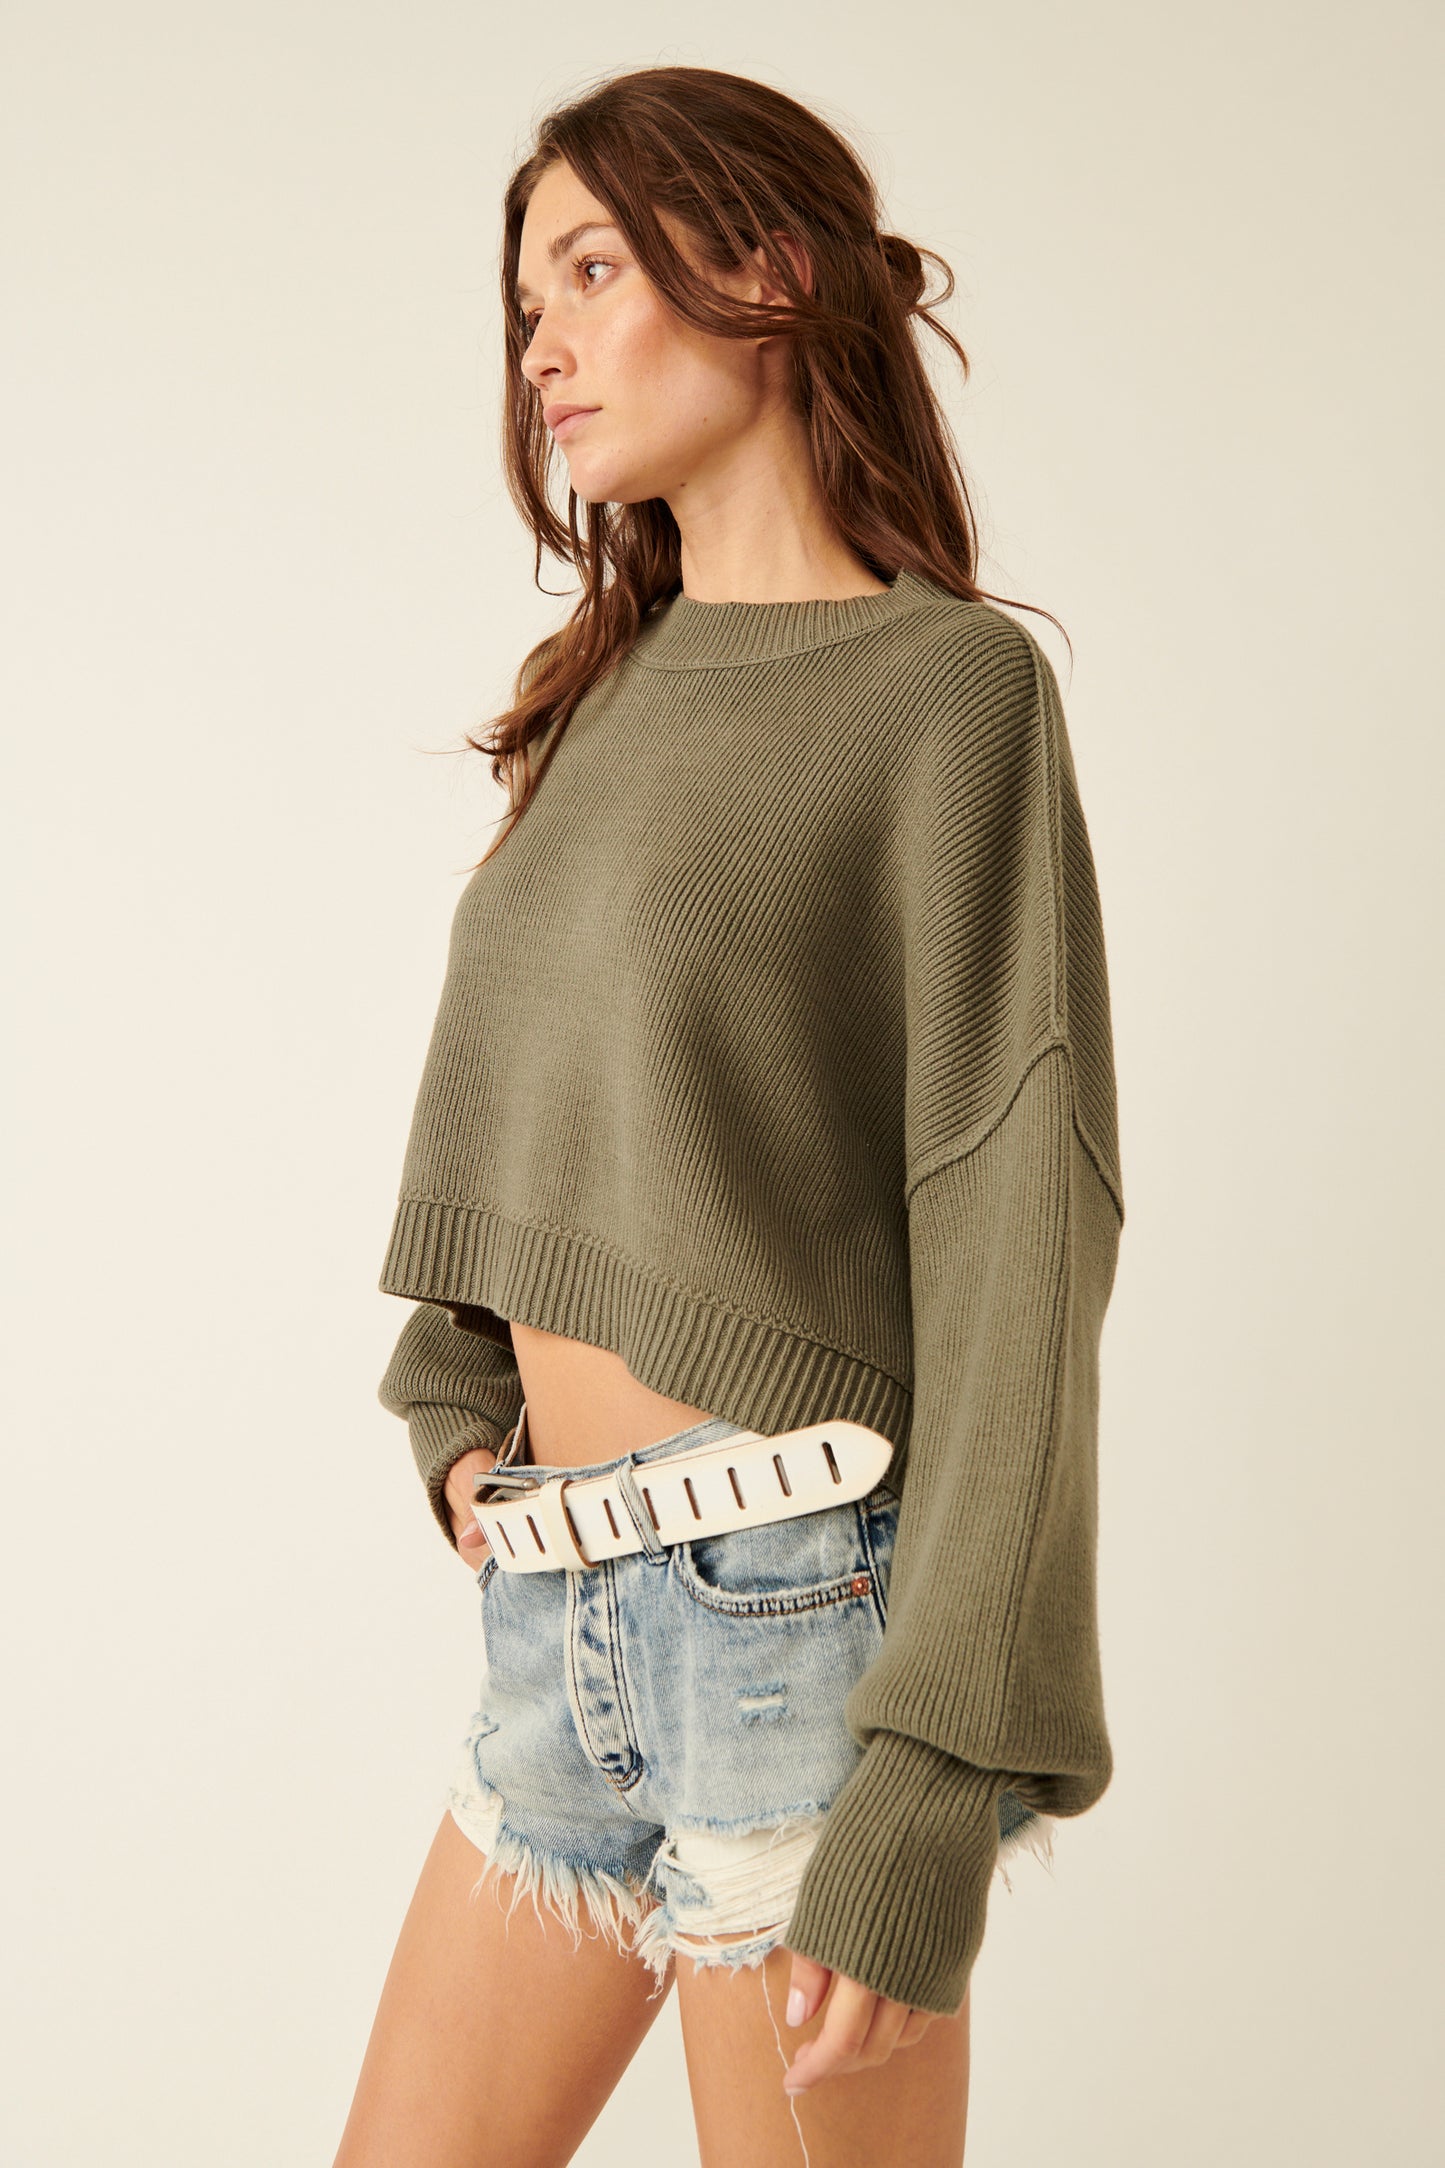 Sweater - FREE PEOPLE - Easy Street Crop Pullover - PLENTY